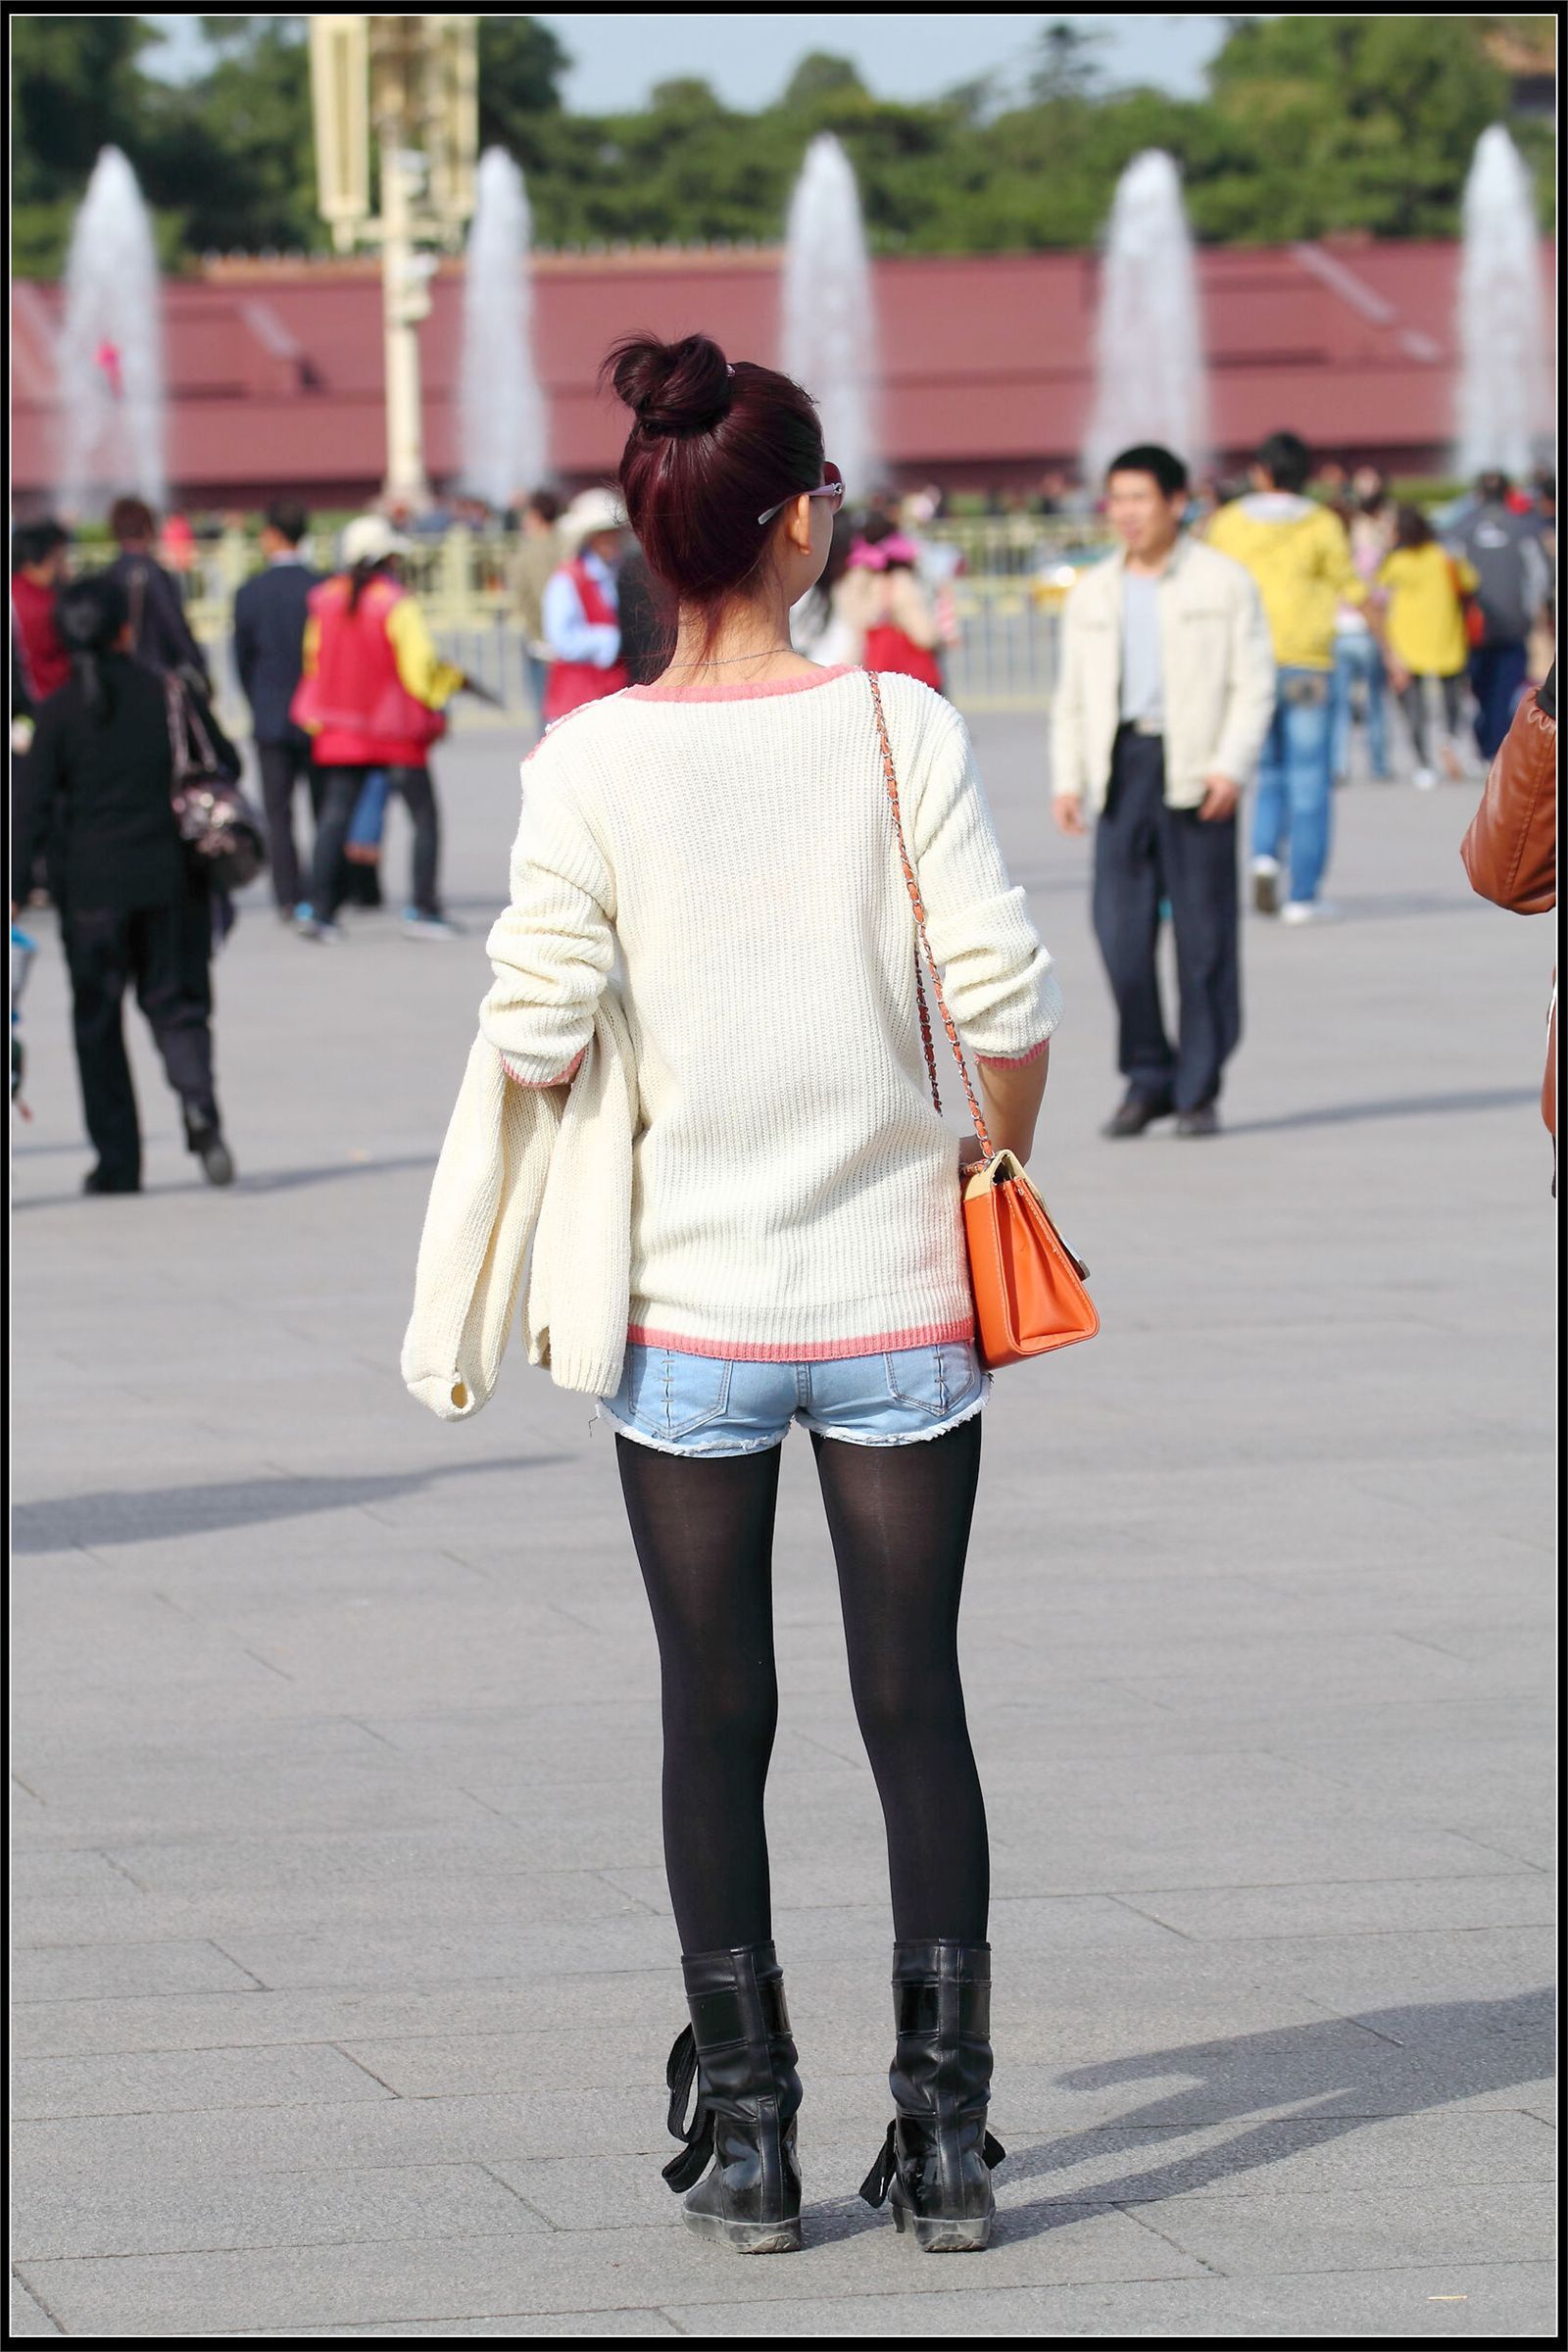 Original street photography silk stockings beauty 055